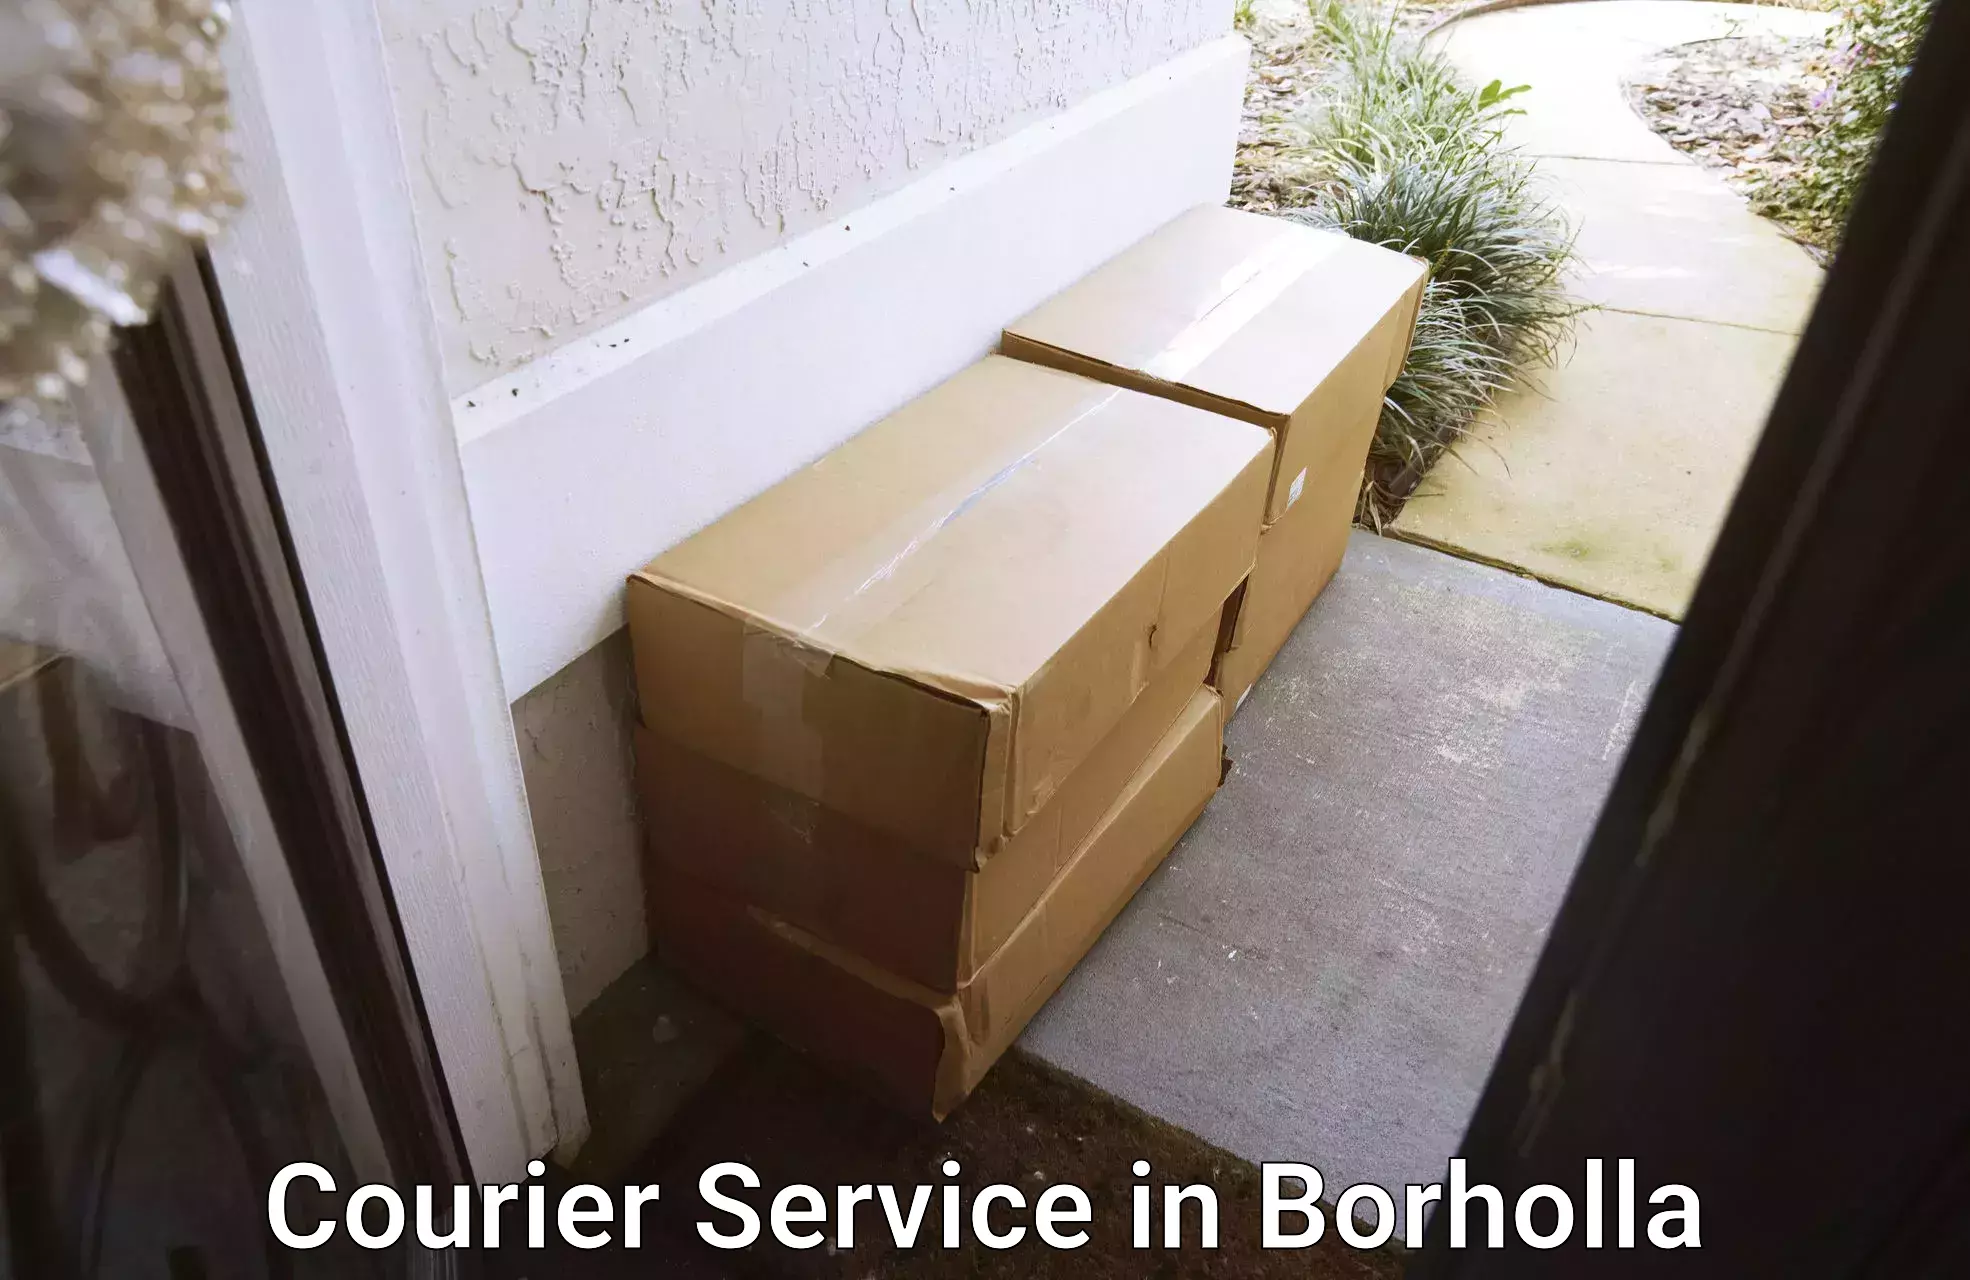 High-priority parcel service in Borholla